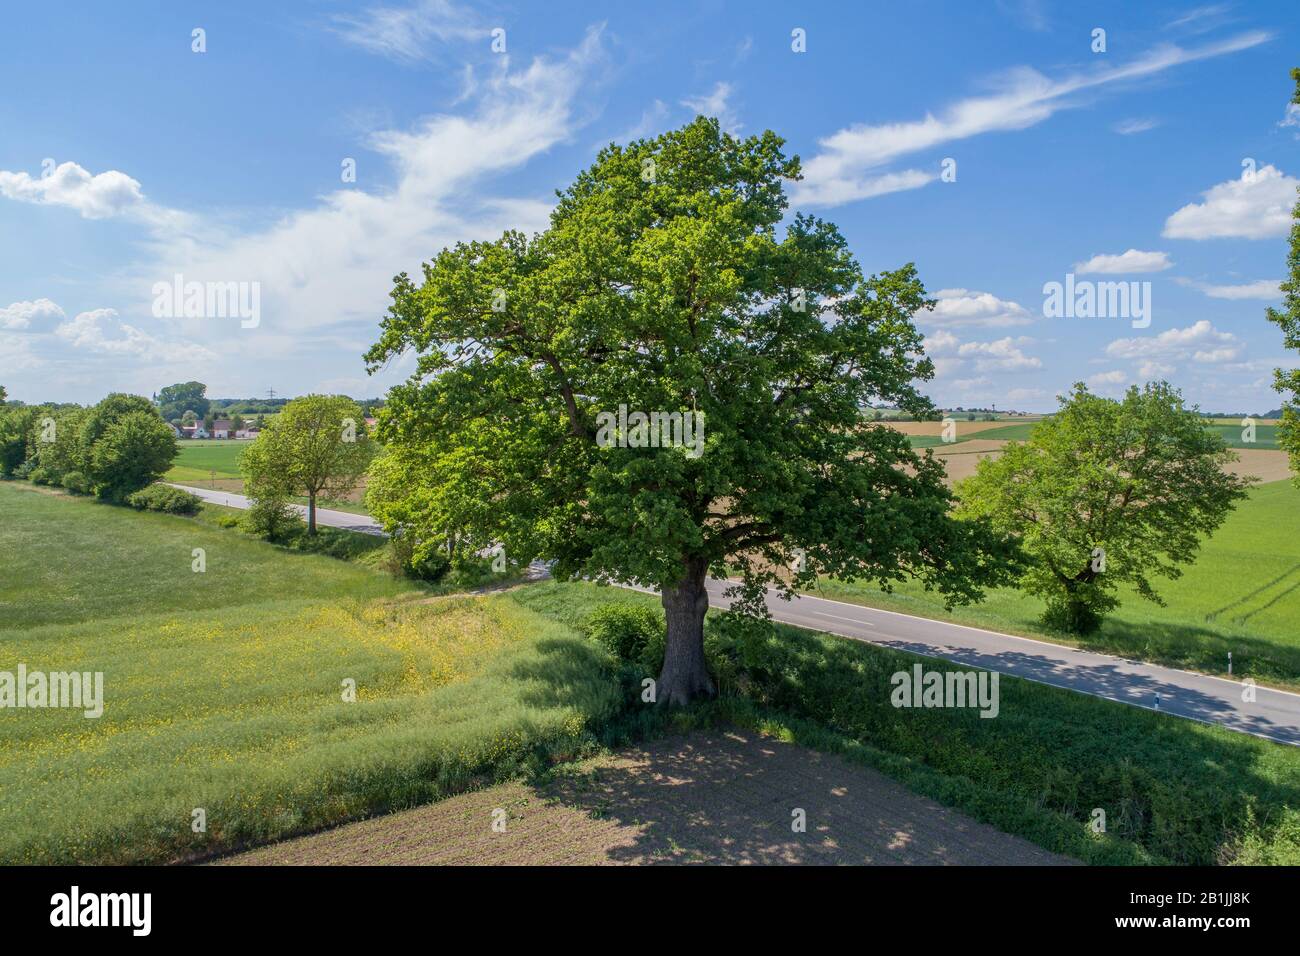 common oak, pedunculate oak, English oak (Quercus robur. Quercus pedunculata), oak on the roadside in field scenery, aerial view, Germany, Bavaria, Oberbayern, Upper Bavaria, Kirchamper Stock Photo